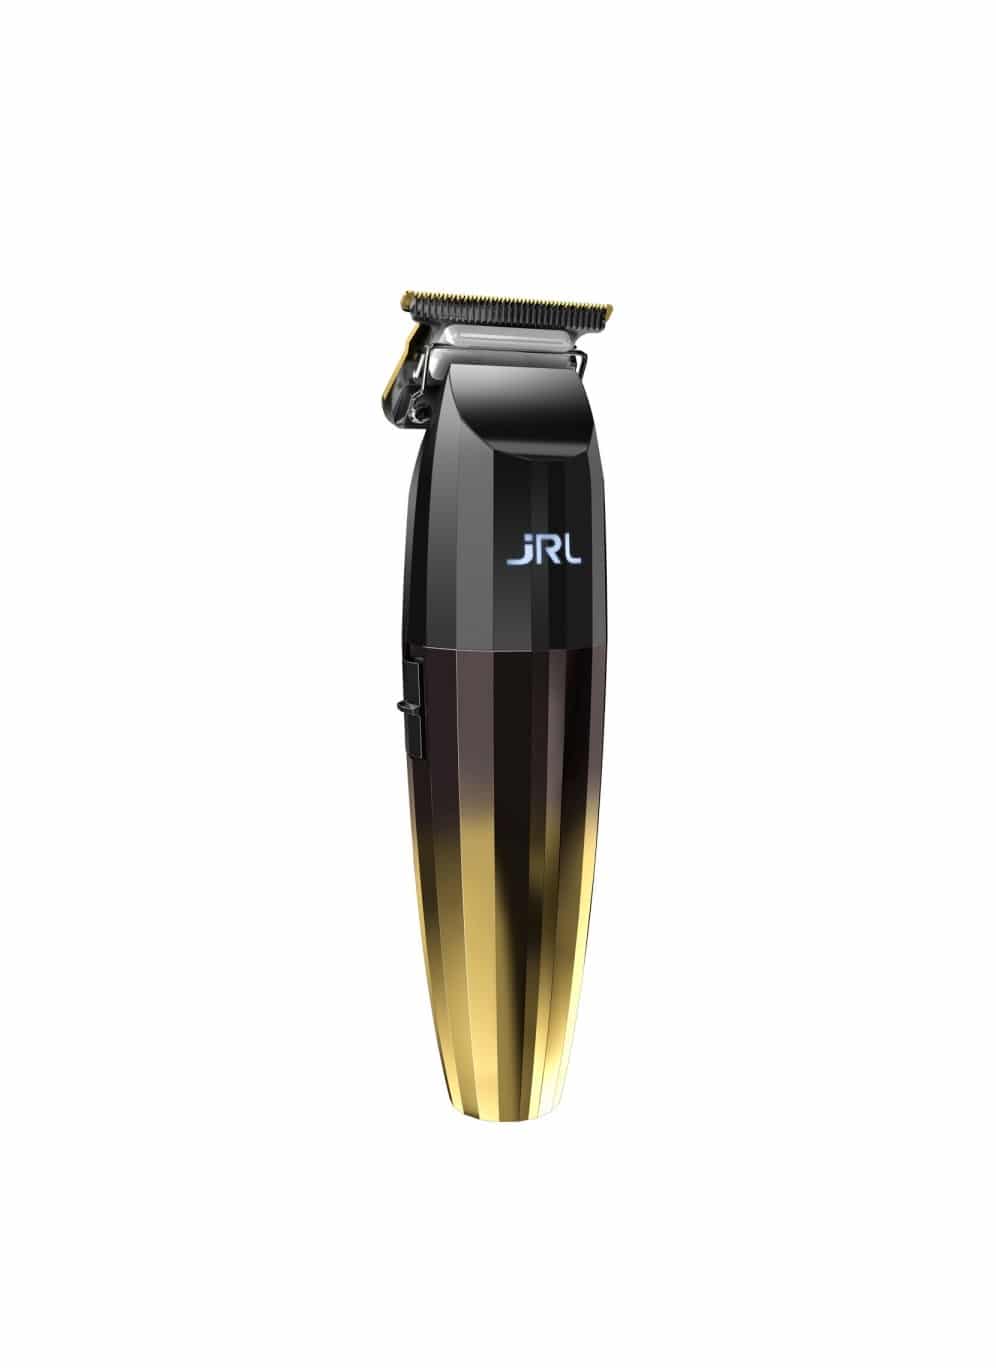 JRL 2020T-G Limited Edition Gold Trimmer